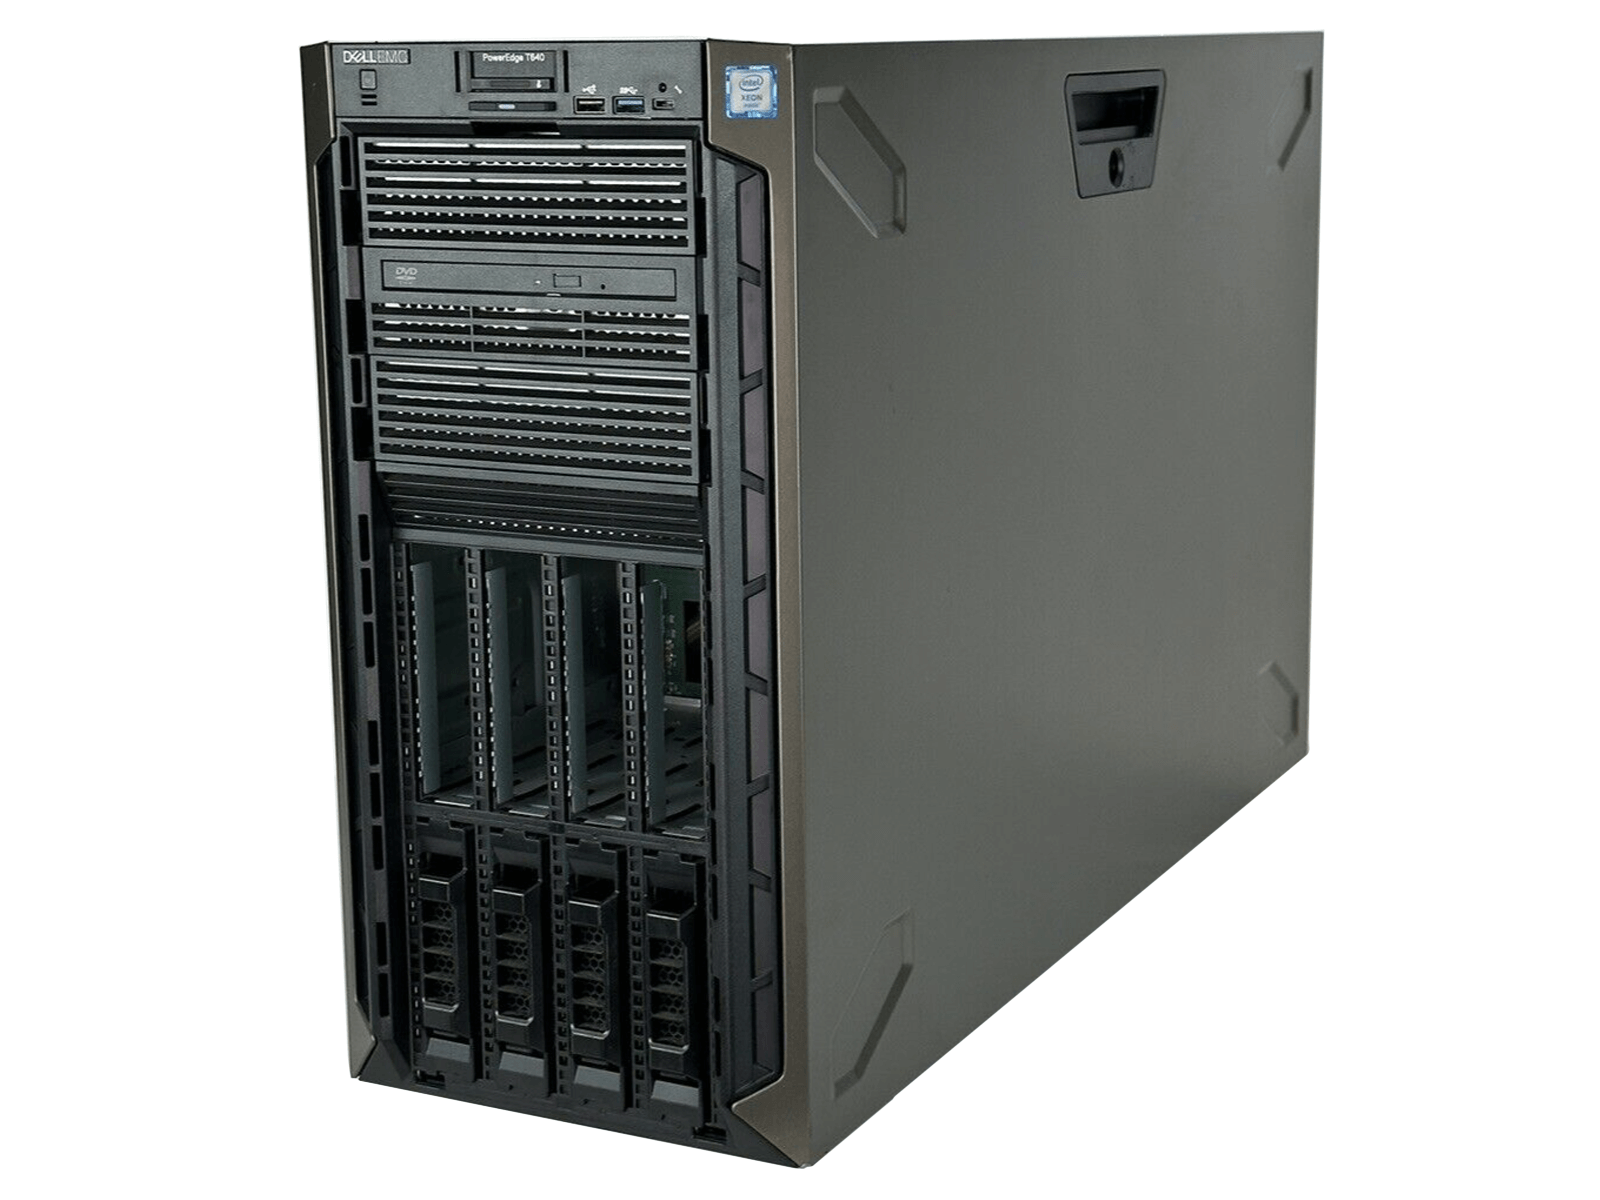 Dell T640 Tower Server 8x LFF Xeon 4112 32GB RAM PERC H740P 3.5 2x 750W PSU.